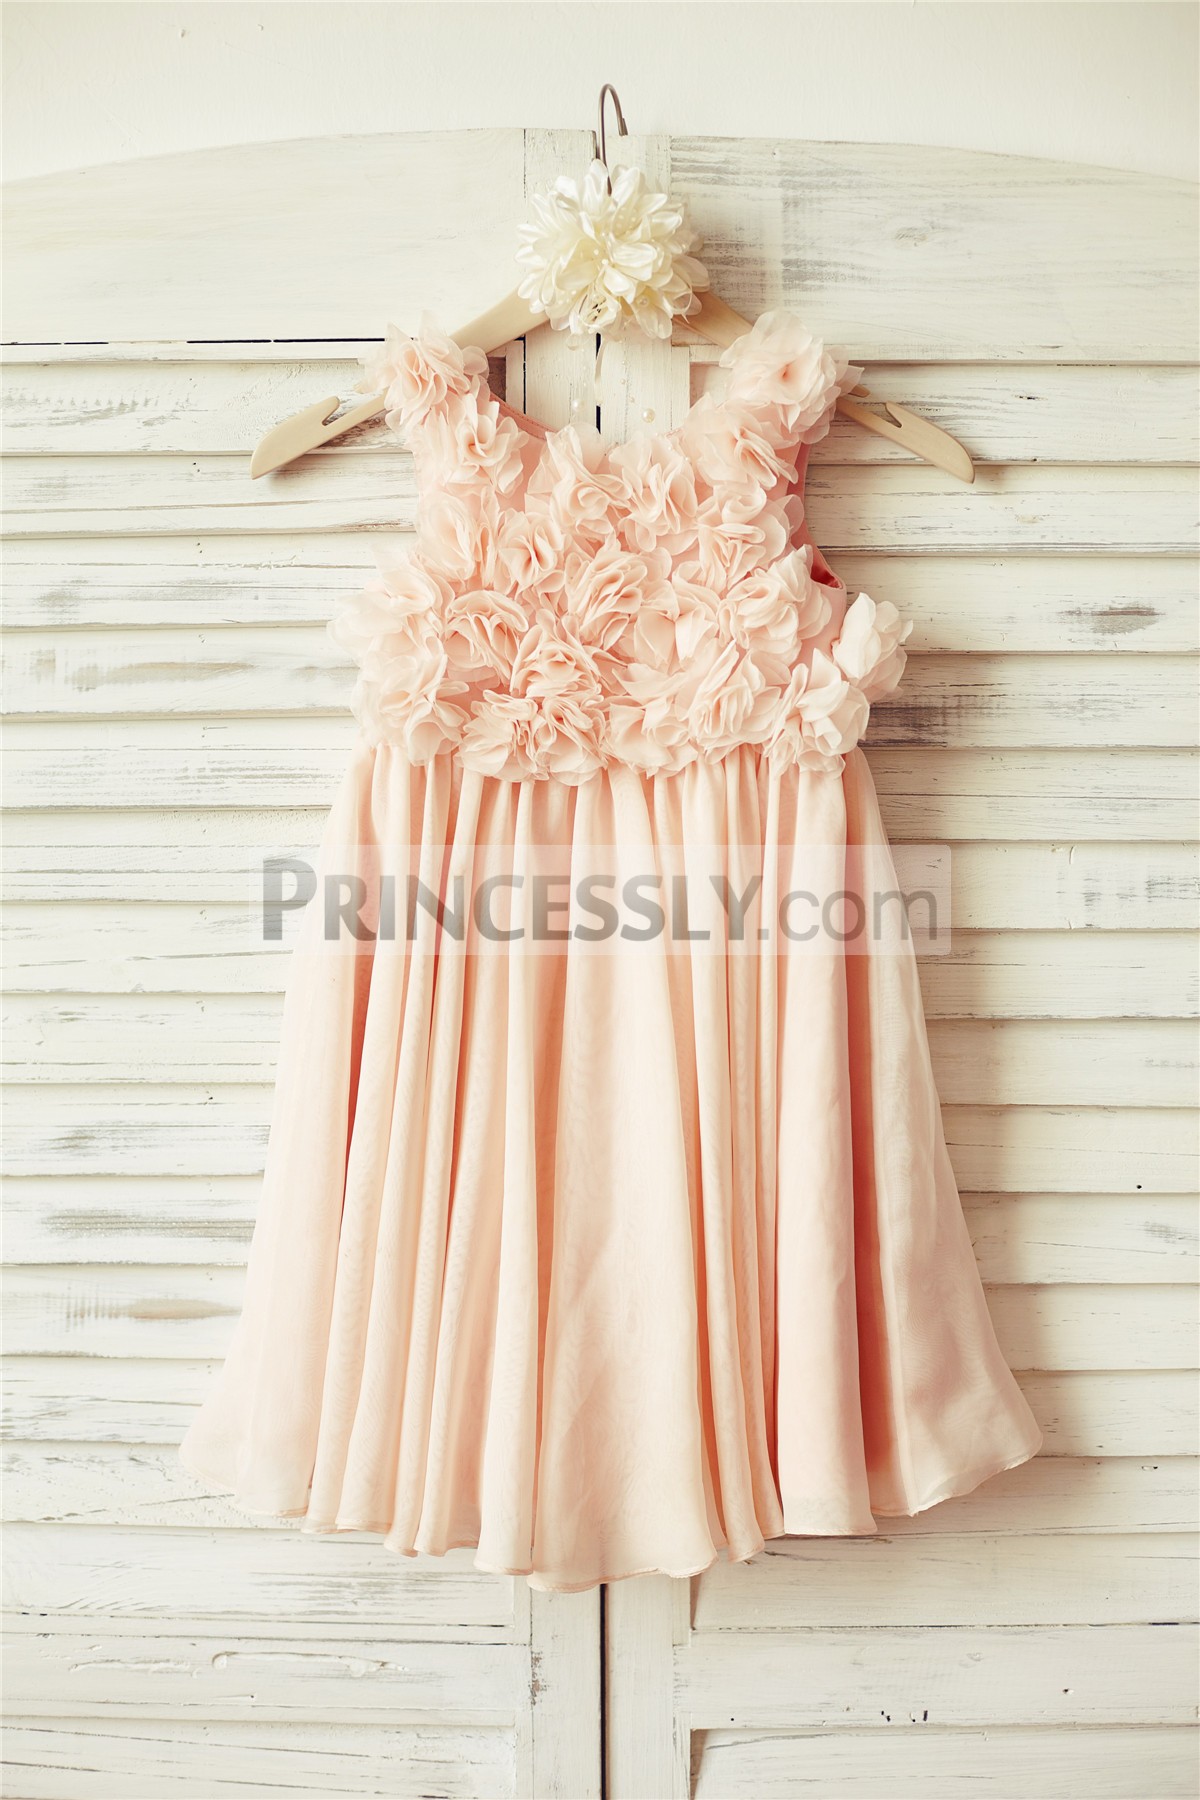 Princessly.com-K1000086-Boho Beach Blush Pink Chiffon Floral Straps Flower Girl Dress-31